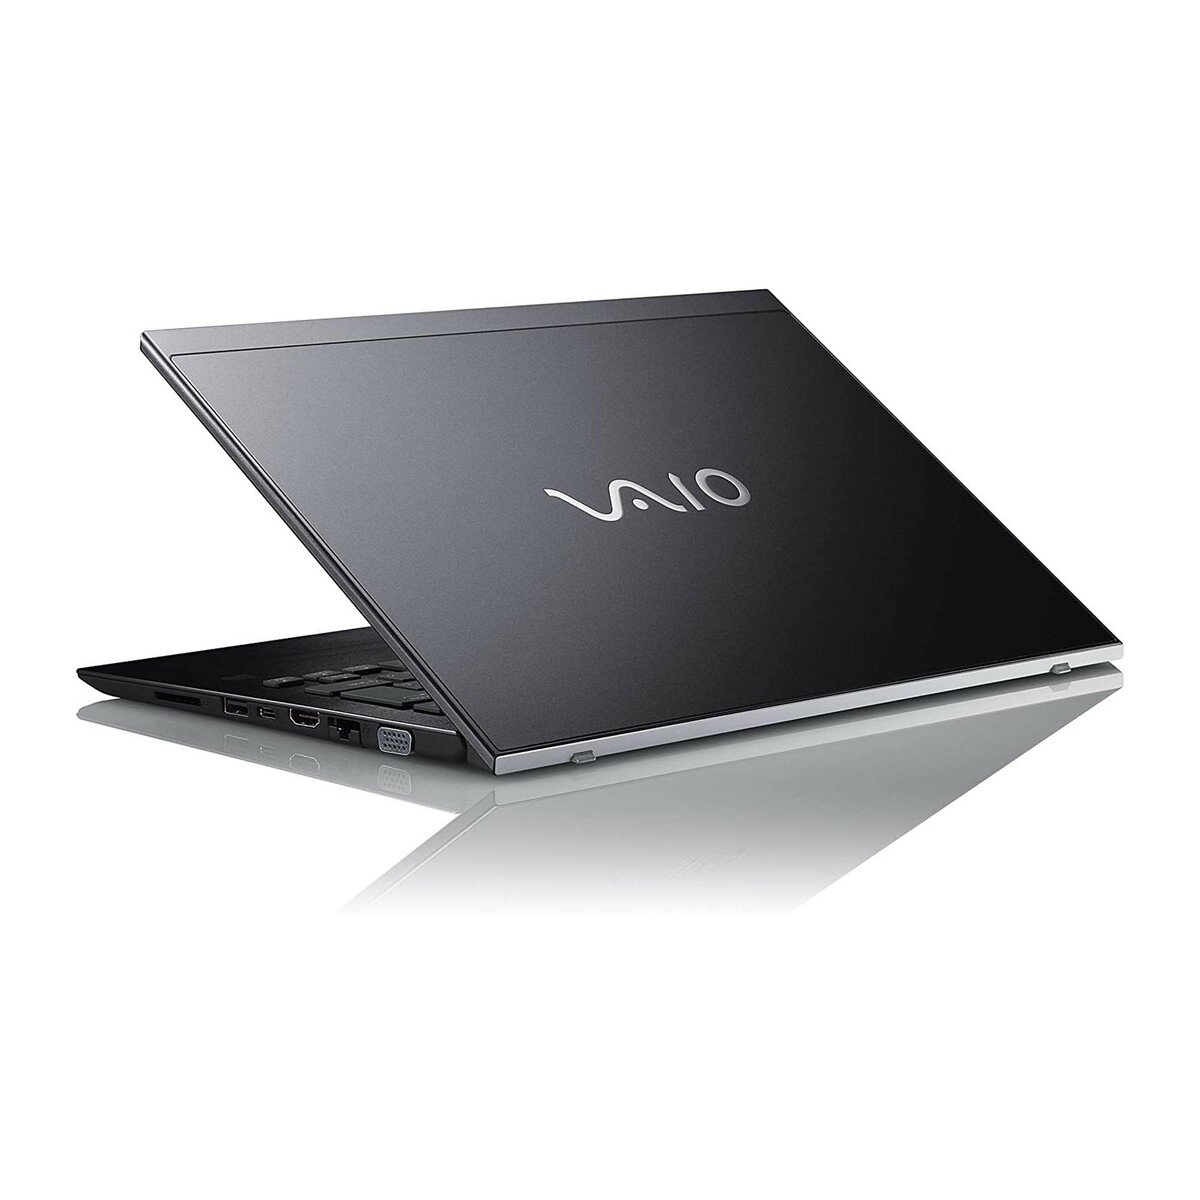 Vaio SX14 NZ14V2ME004P Intel Core i5 Processor, 8GB RAM, 256GB SSD, Shared Graphics, 14.0inch FHD, Windows 10 Pro, Black